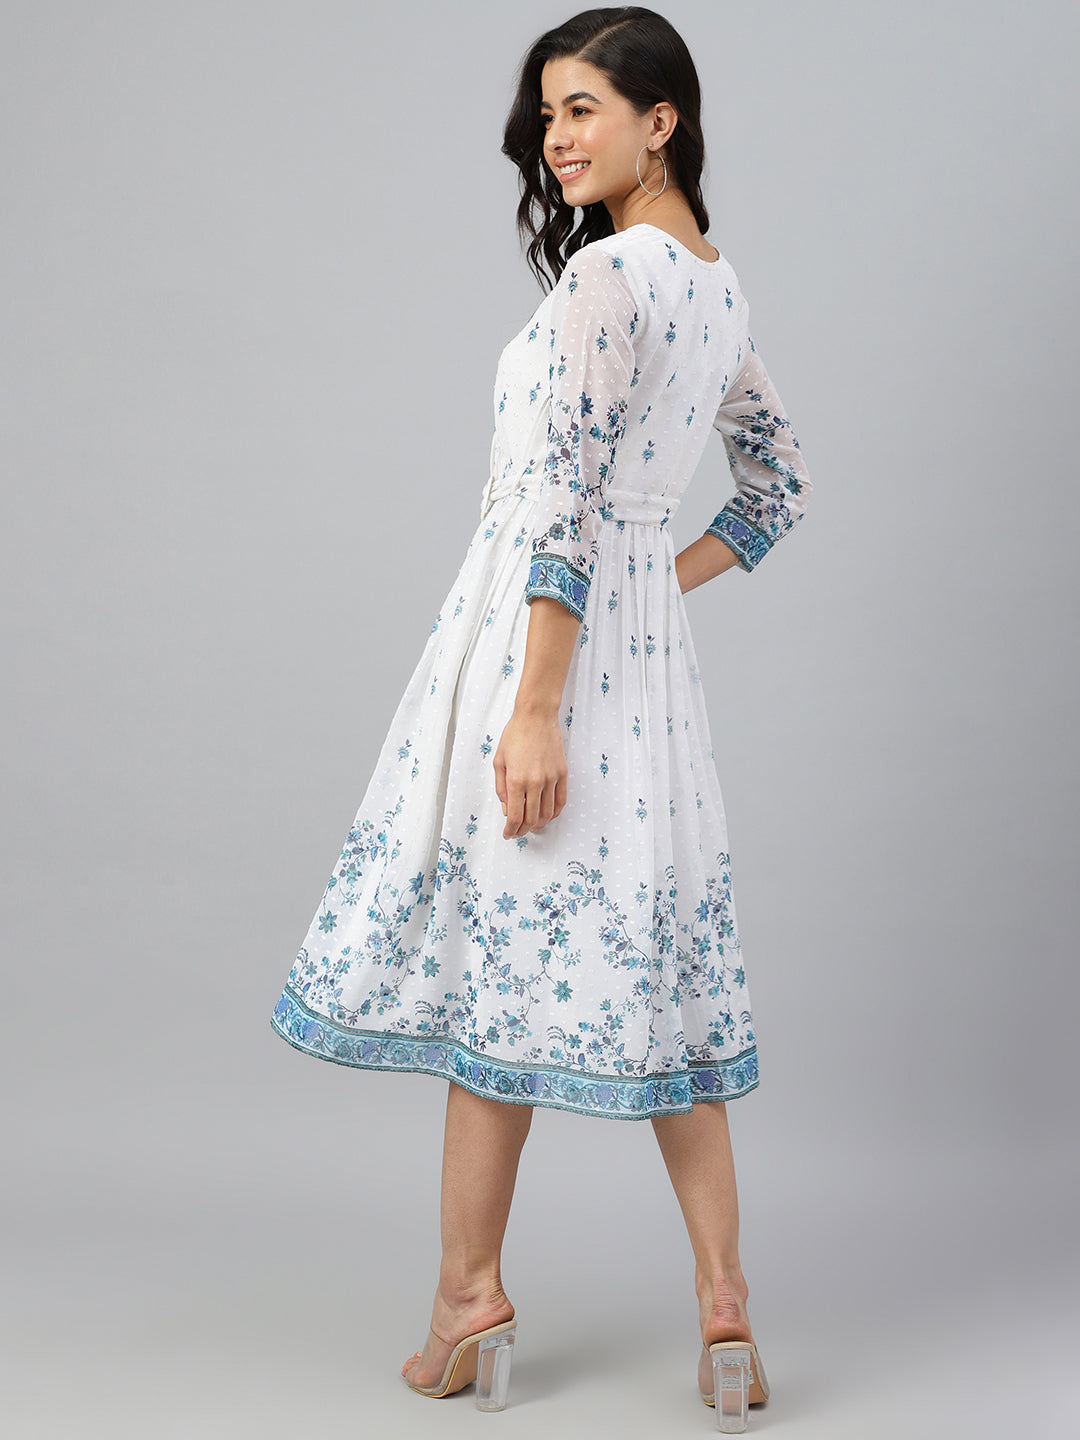 Women's Digital Printed White Georgette Dress - Janasya